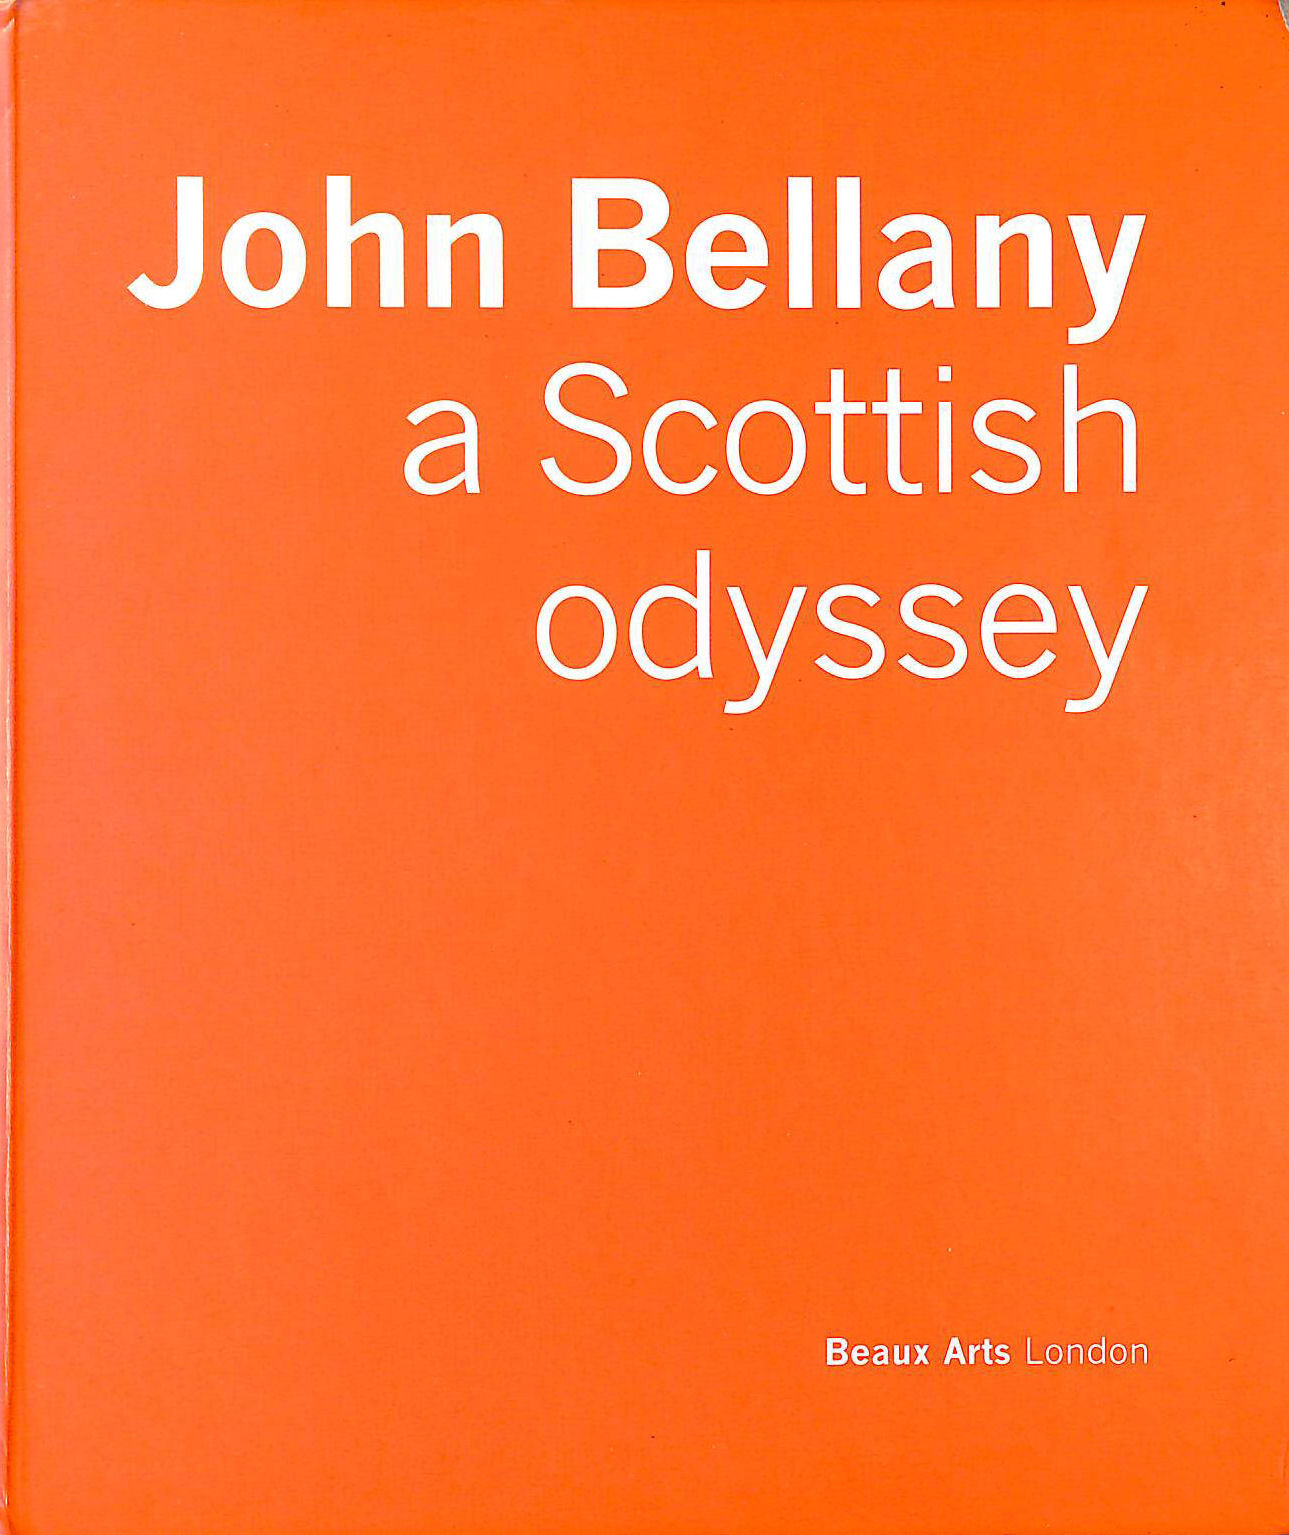 BEAUS ARTS - John Bellamy: a Scottish Odyssey